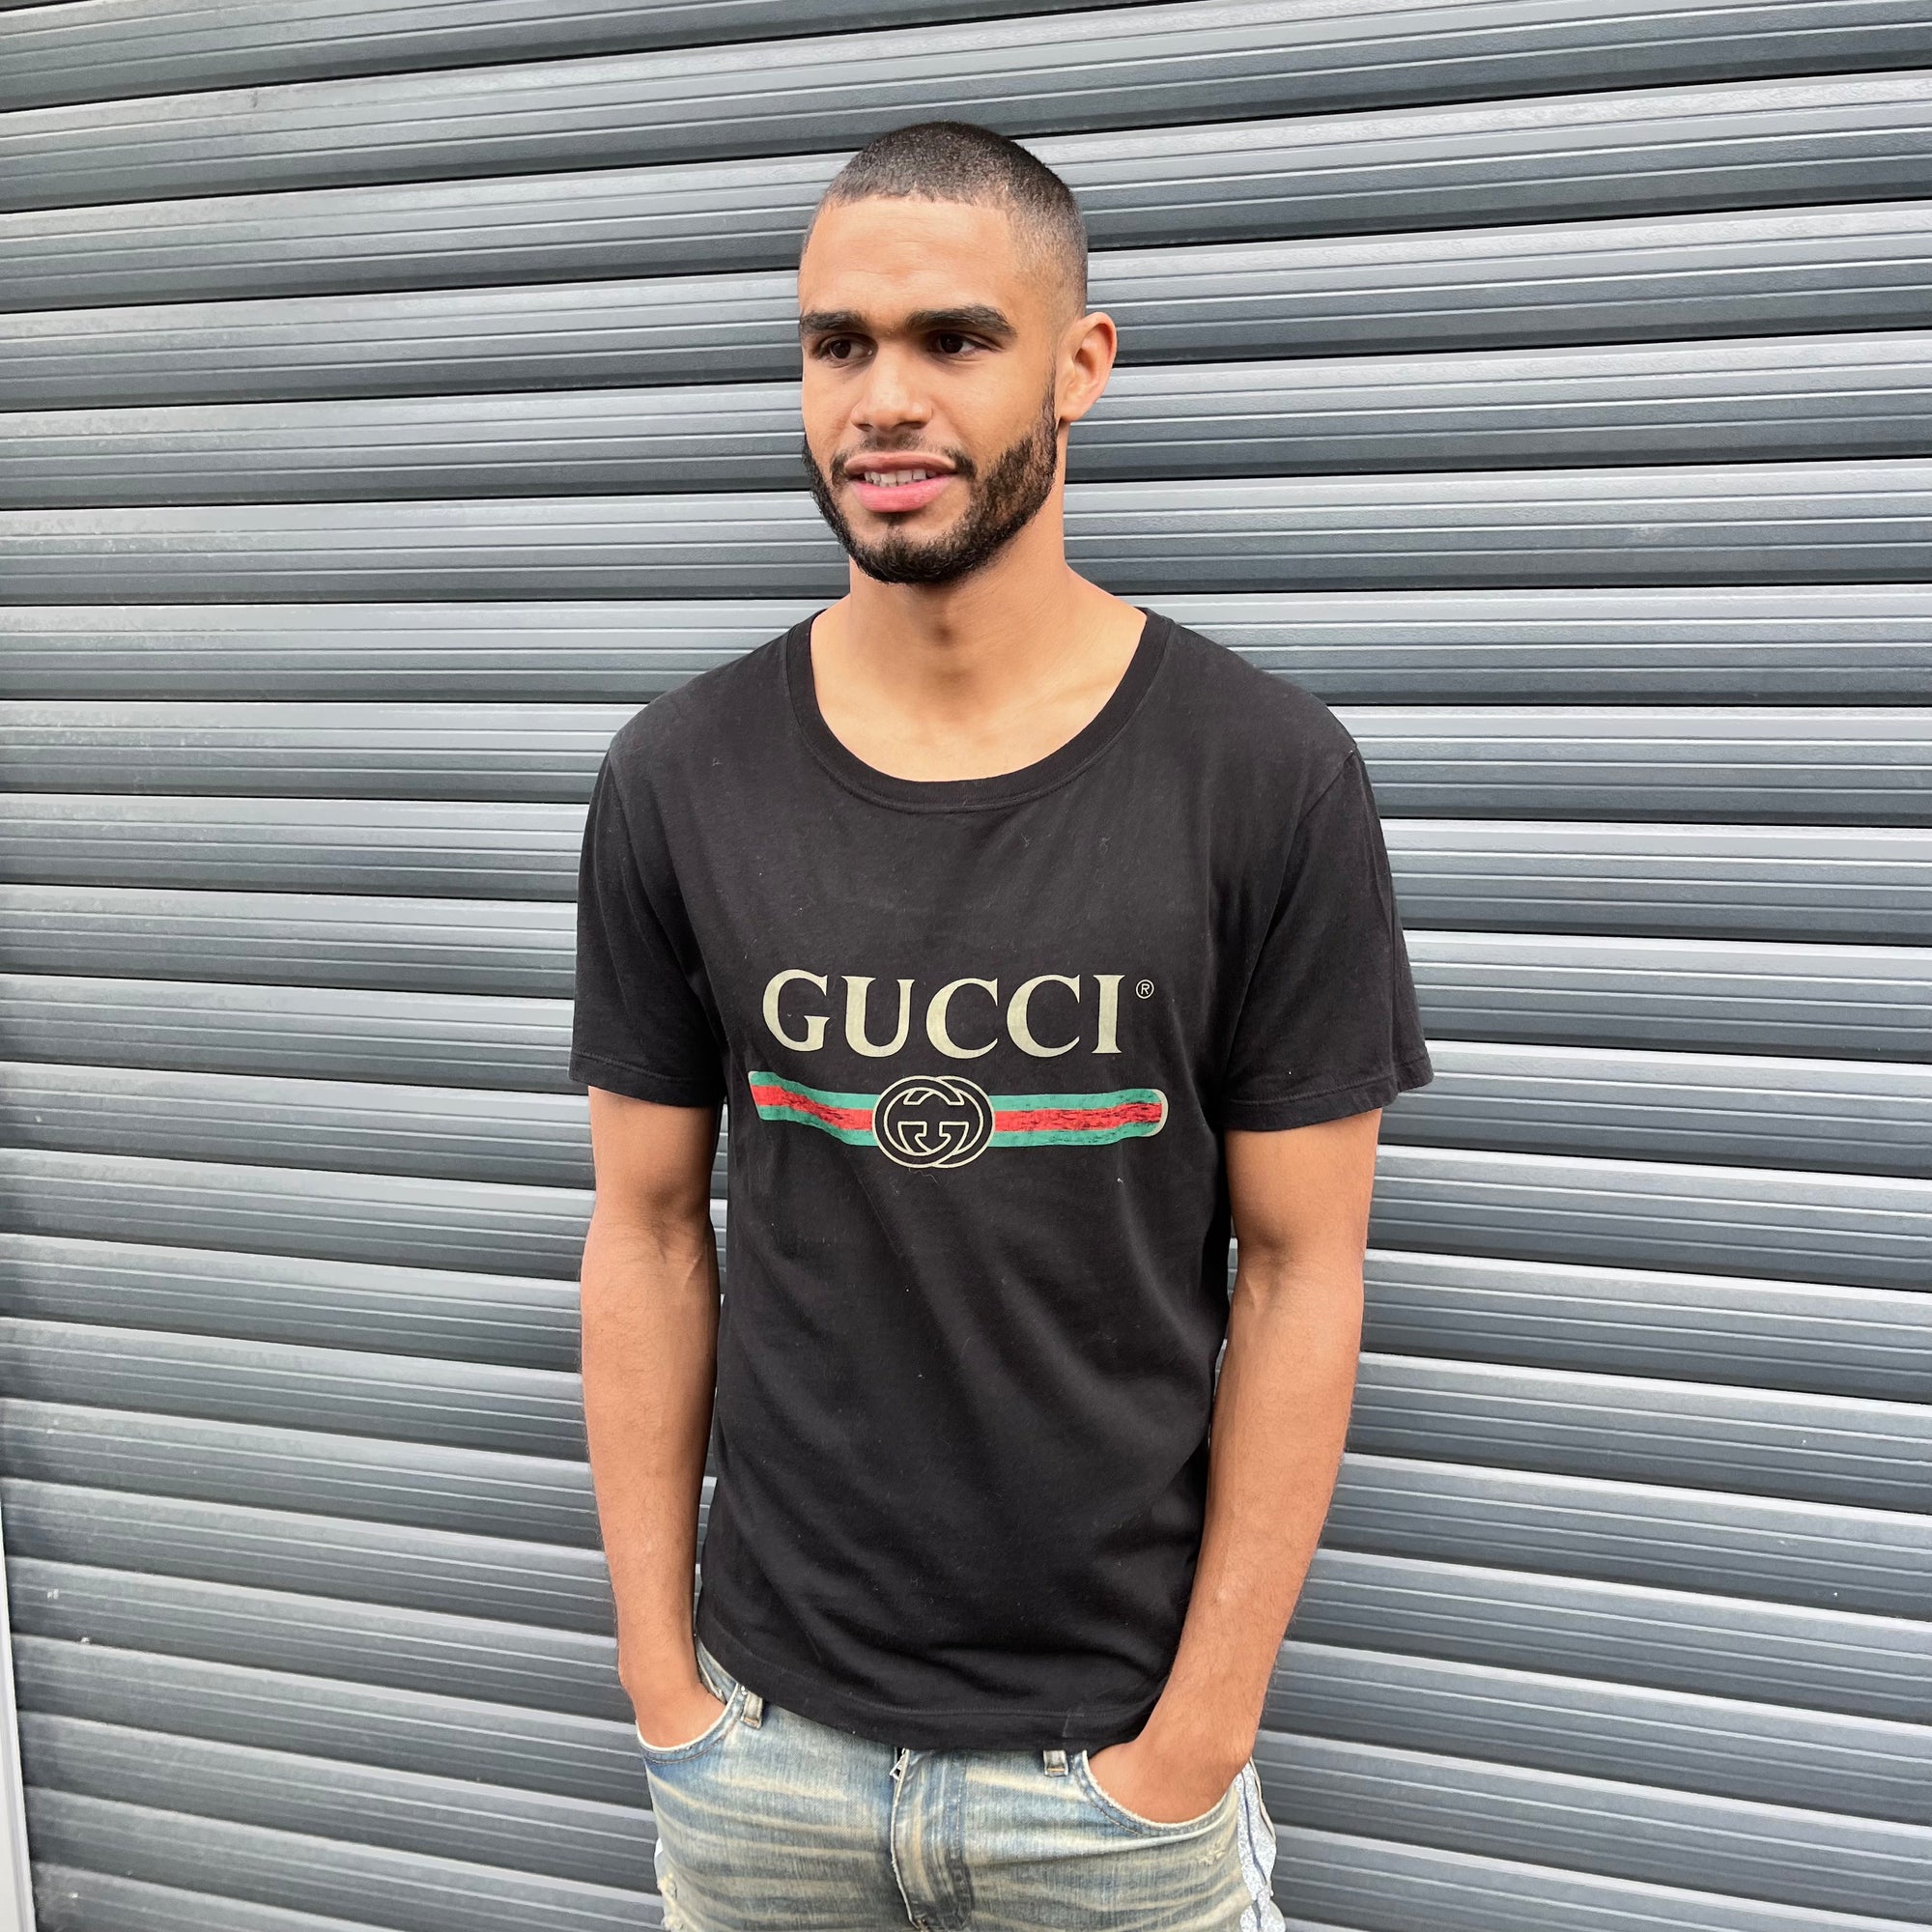 Gucci Black & Green Logo T-Shirt - Medium - Only Worn Once